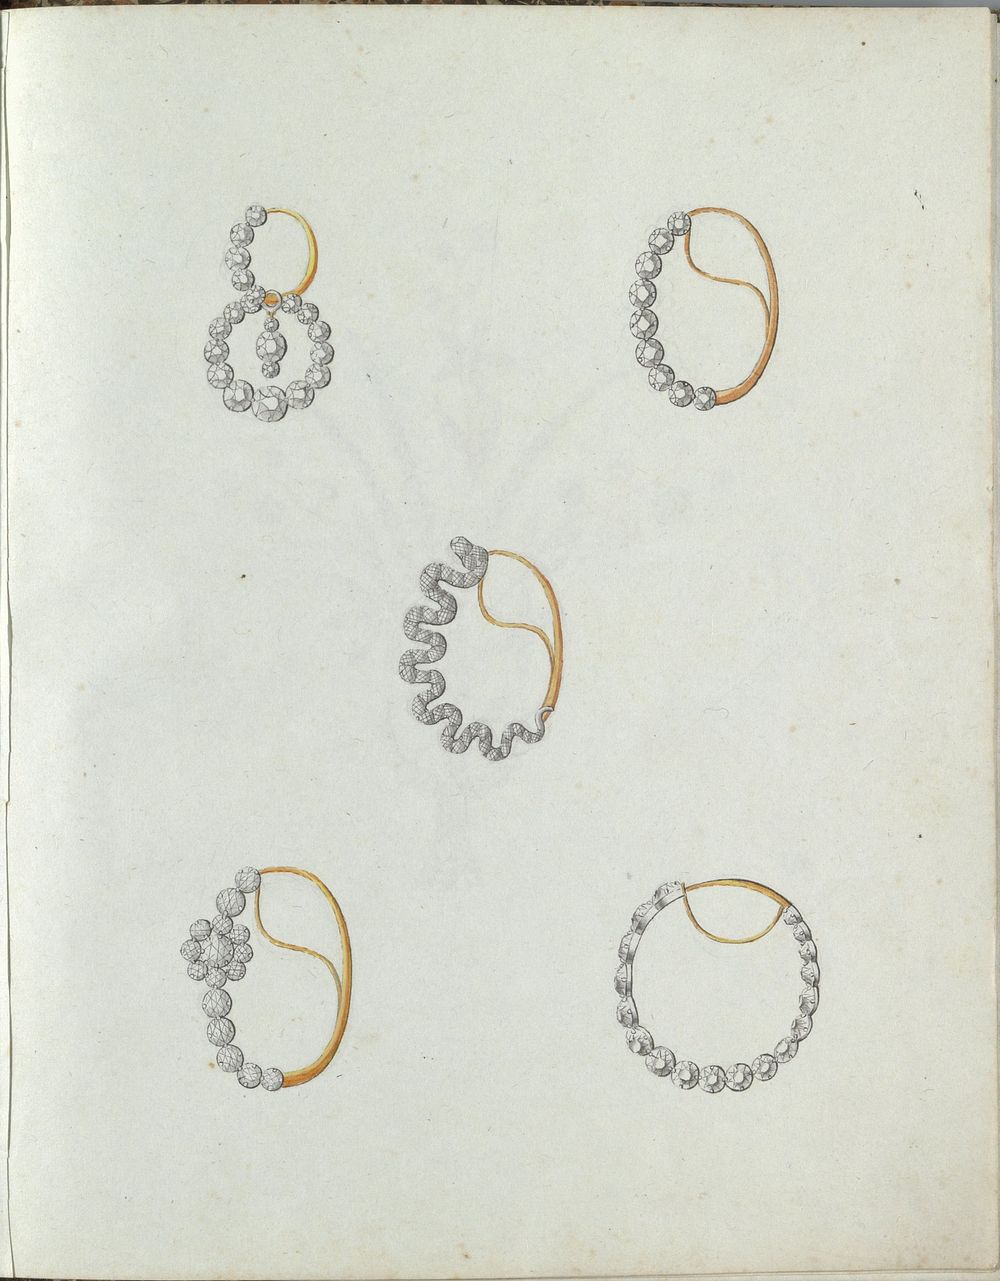 Vijf juwelen (c. 1800 - c. 1810) by Carl Friedrich Bärthel